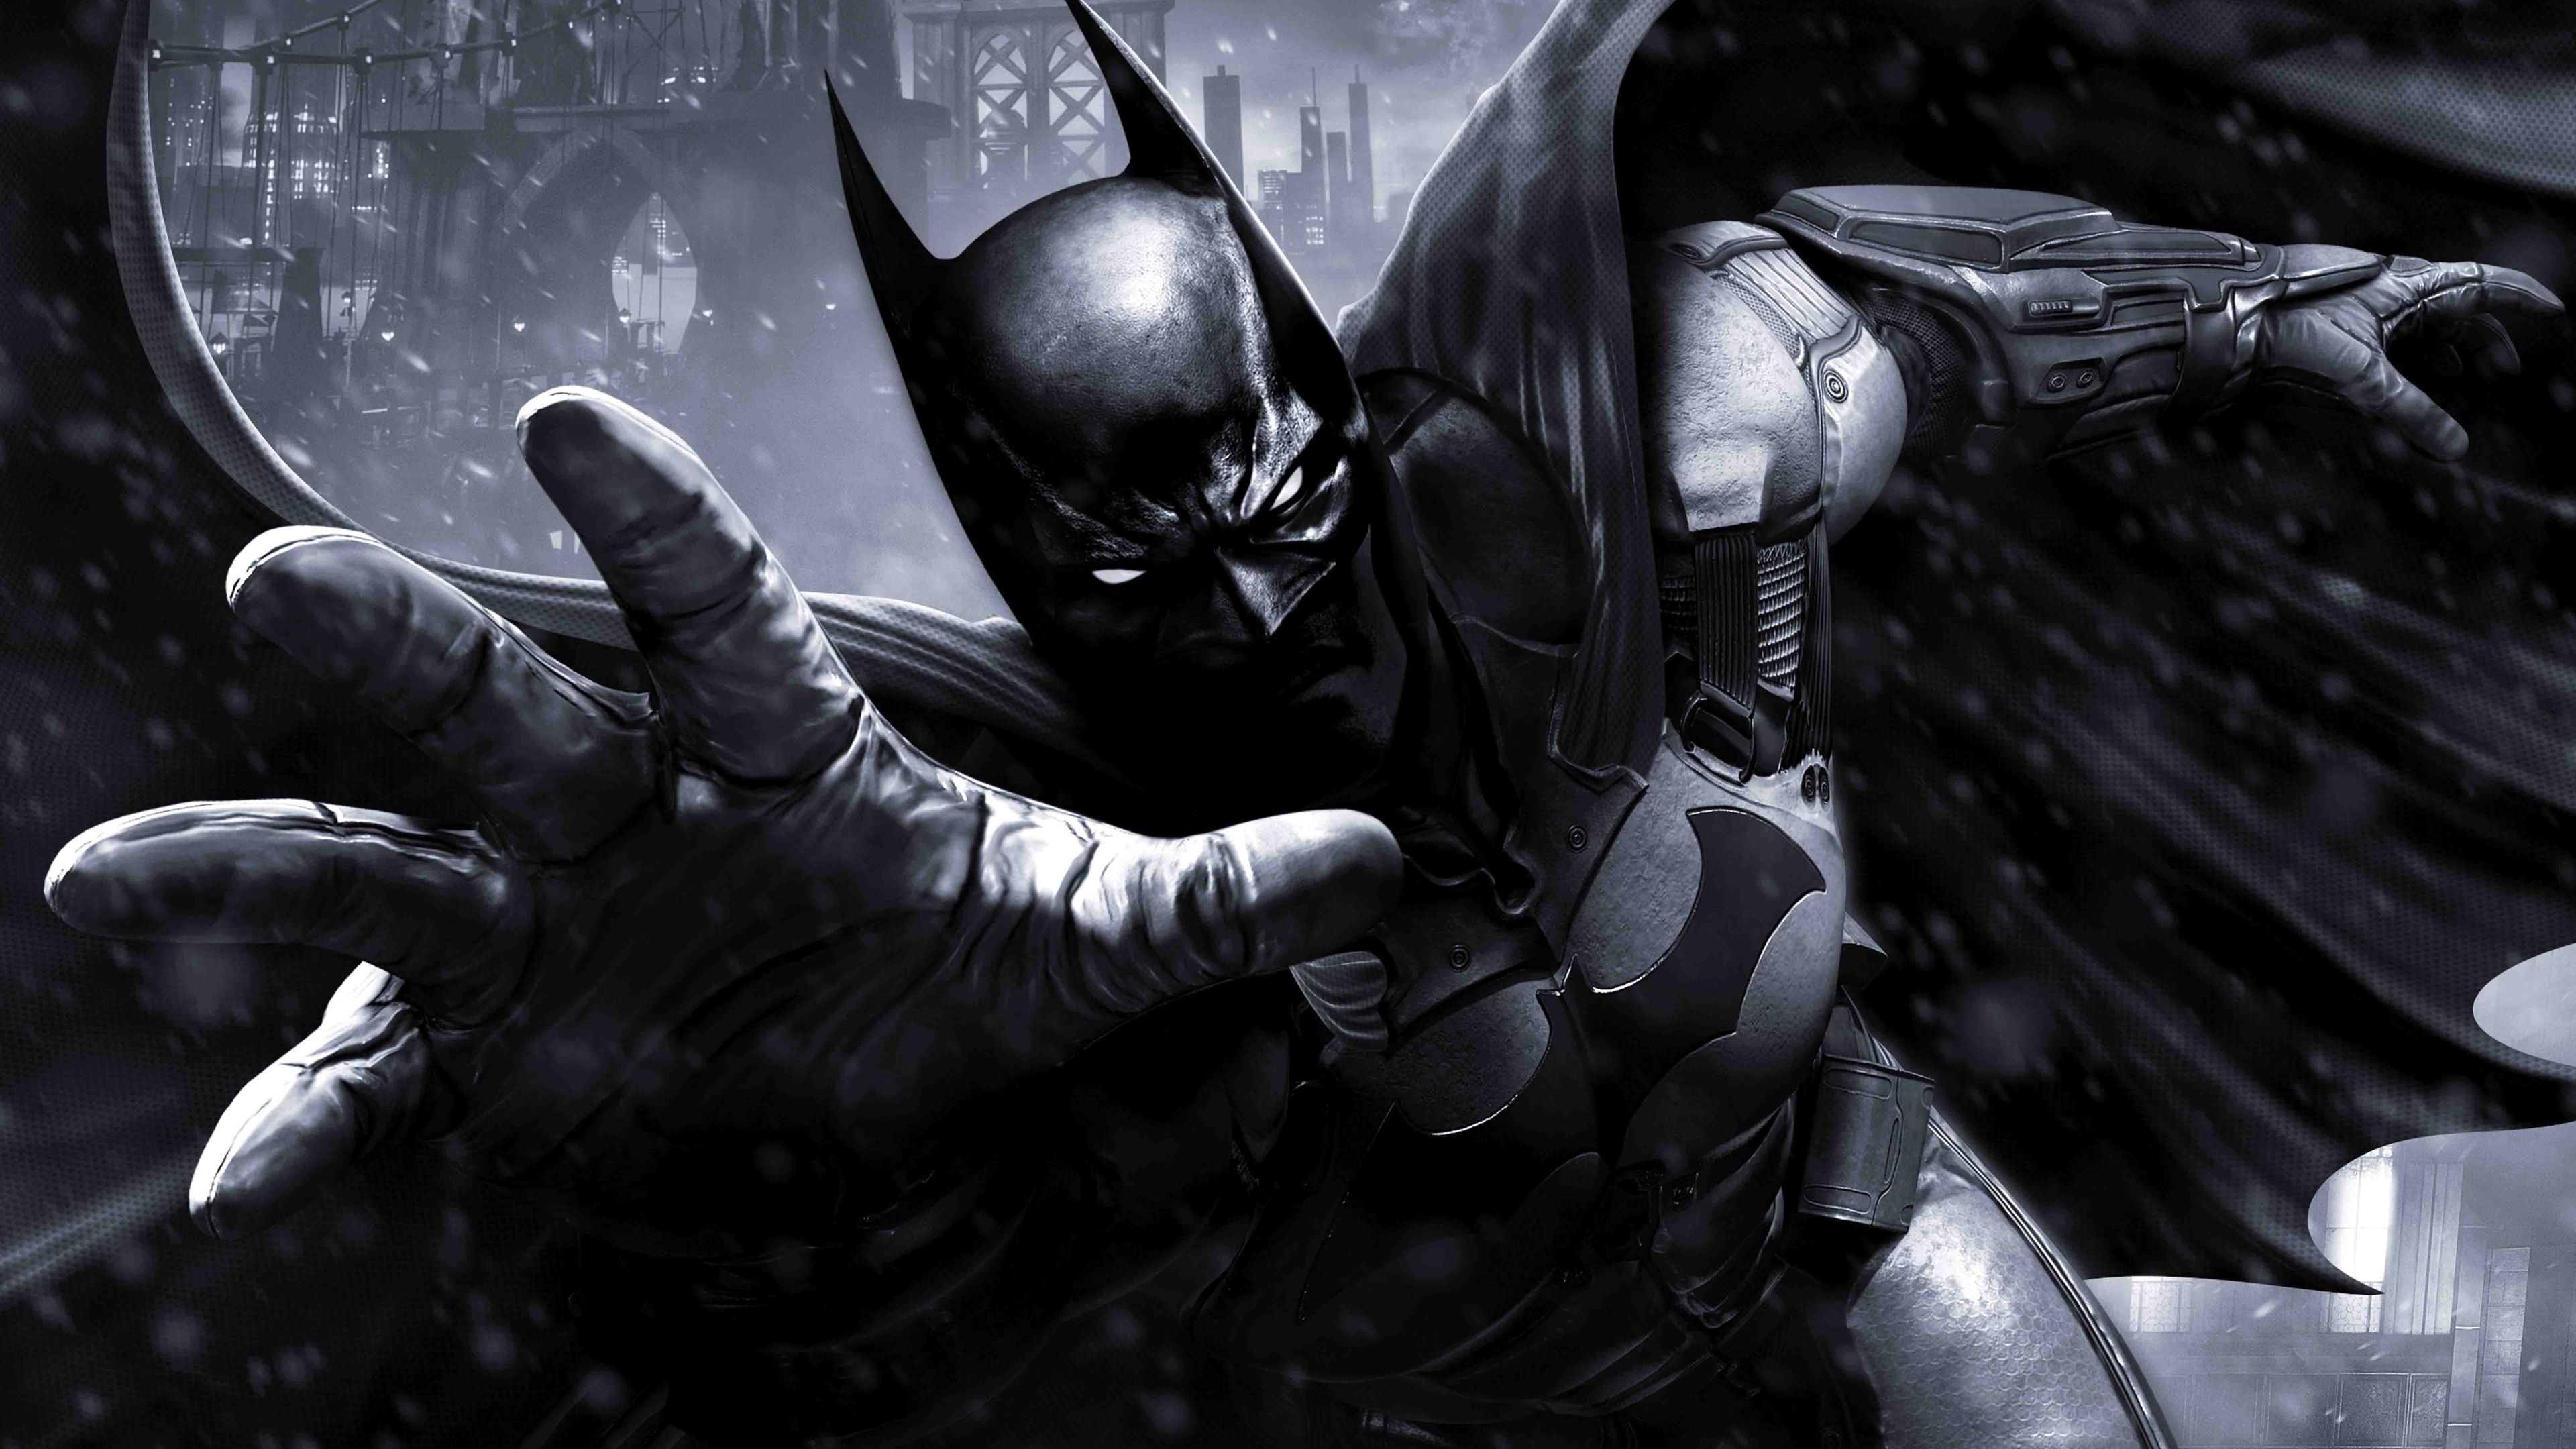 Wallpaper 4k Batman Arkham Knight8k 4k Wallpaper, 5k Wallpaper, 8k Wallpaper, Batman Arkham Knight Wallpaper, Batman Wallpaper, Games Wallpaper, Hd Wallpaper